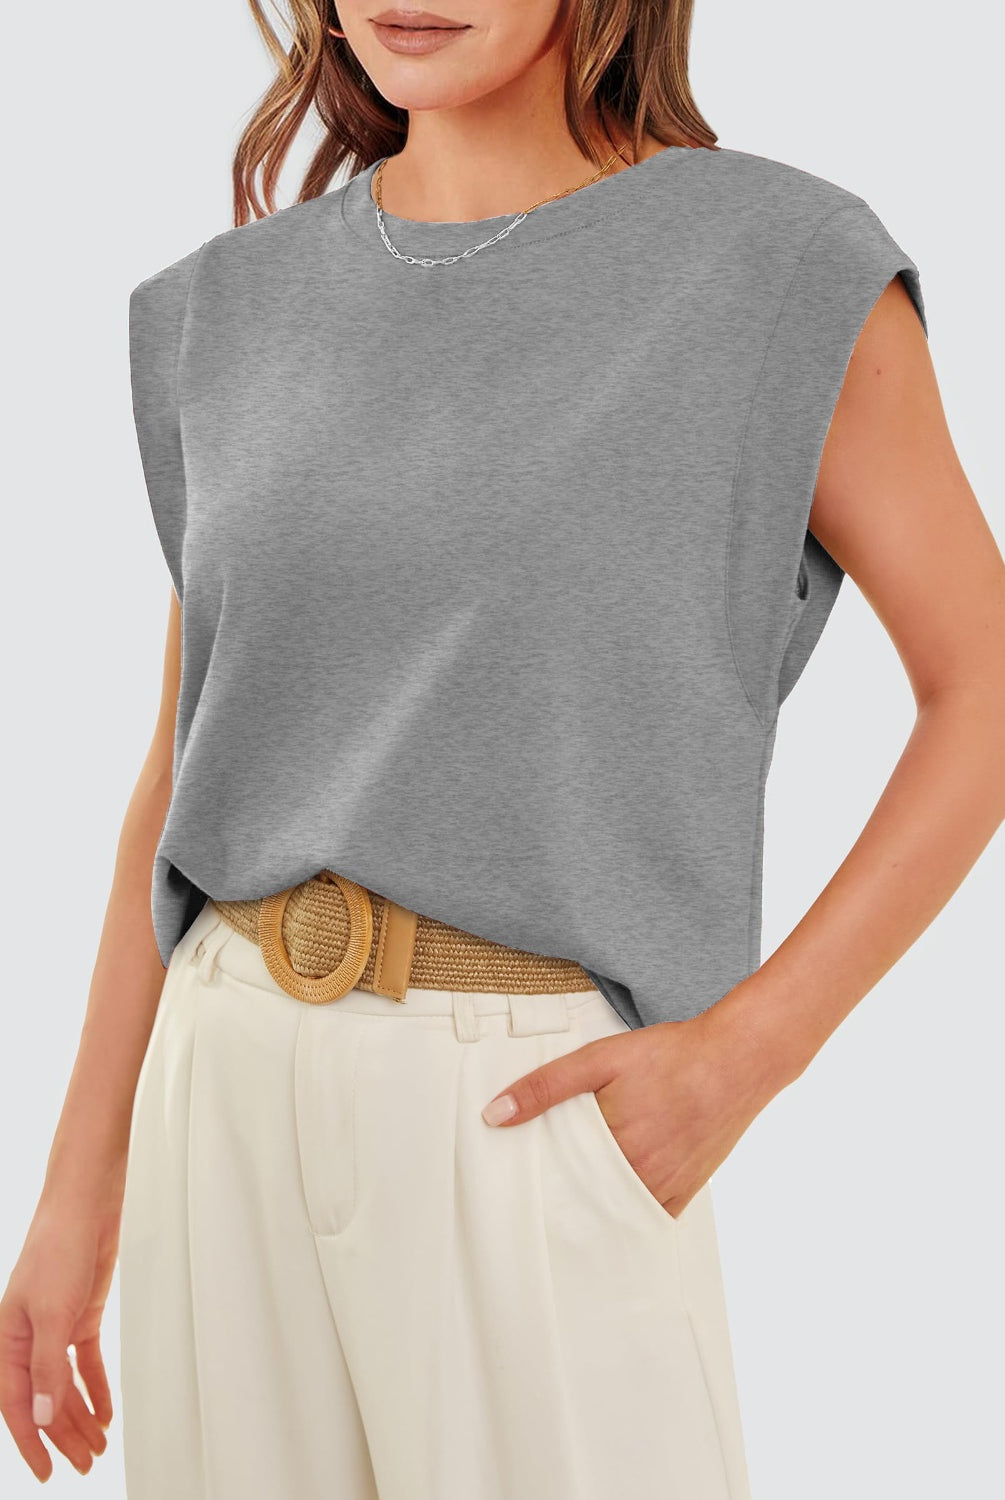 Heather Grey View. Round Neck Cap Sleeve Tank-Krush Kandy, Women's Online Fashion Boutique Located in Phoenix, Arizona (Scottsdale Area)